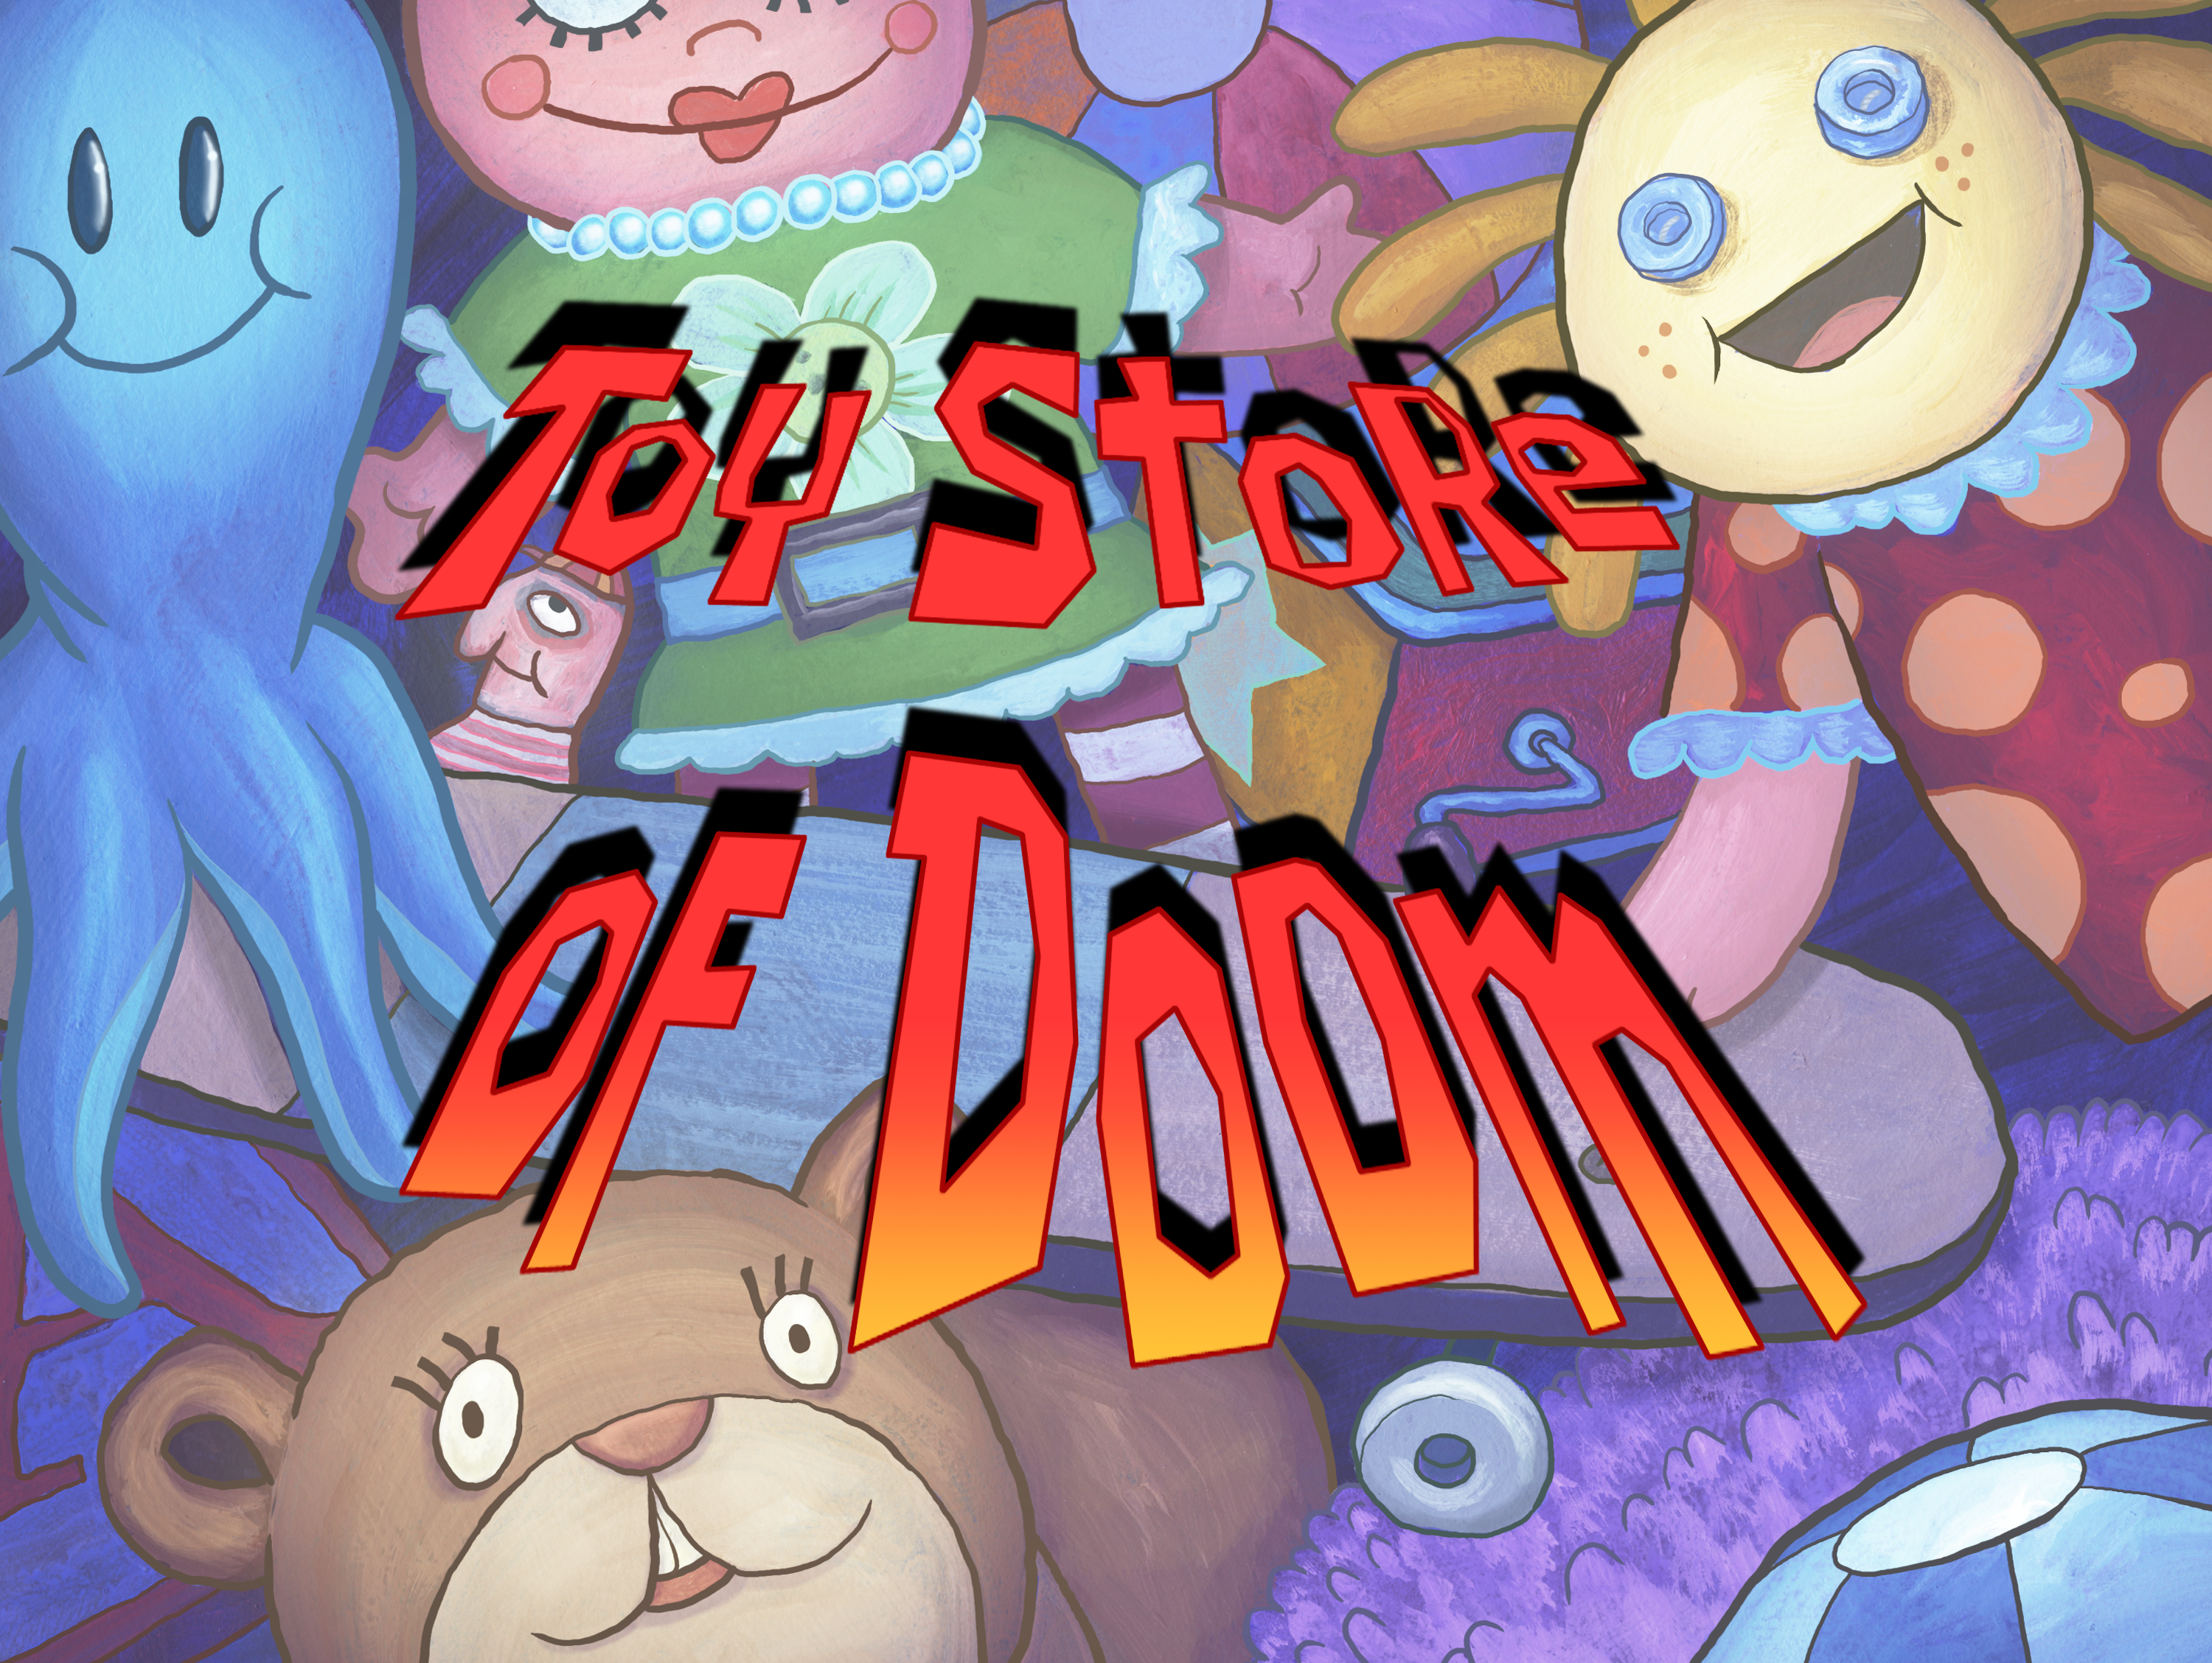 Costume Spongebob Patrick – The Toys Store